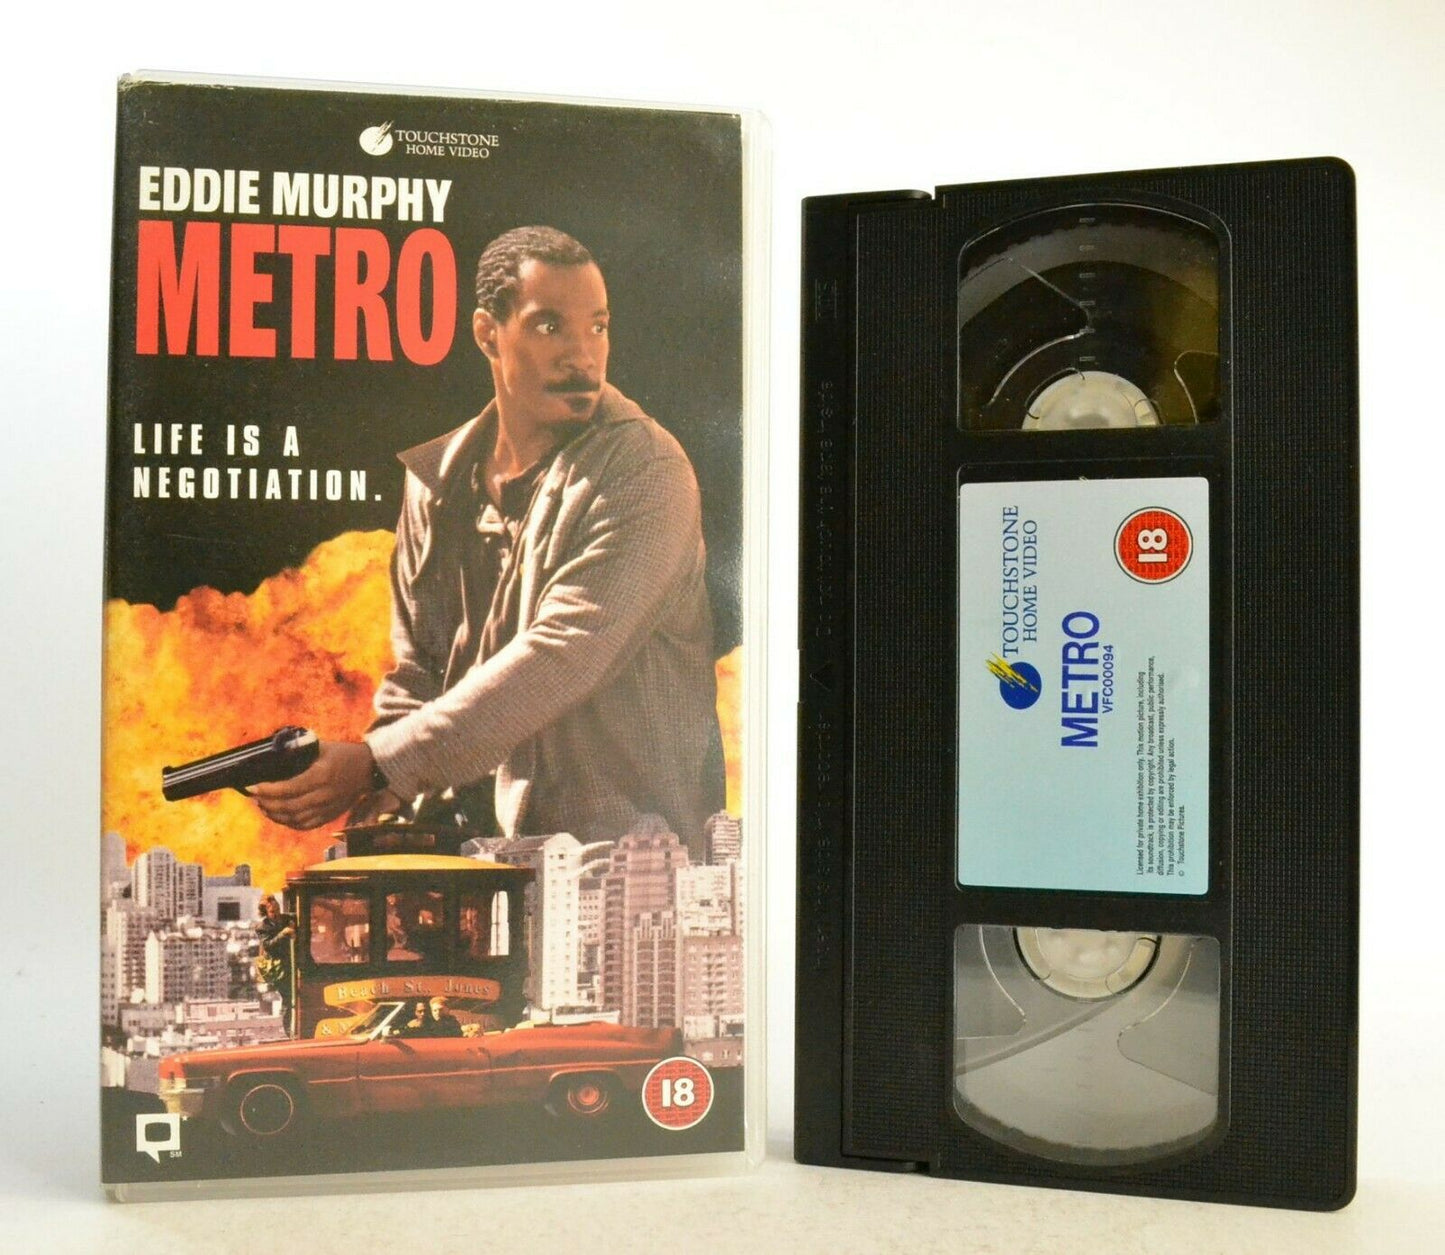 Metro: Touchstone (1997) - Action Thriller - Eddie Murphy/Michael Rapaport - VHS-